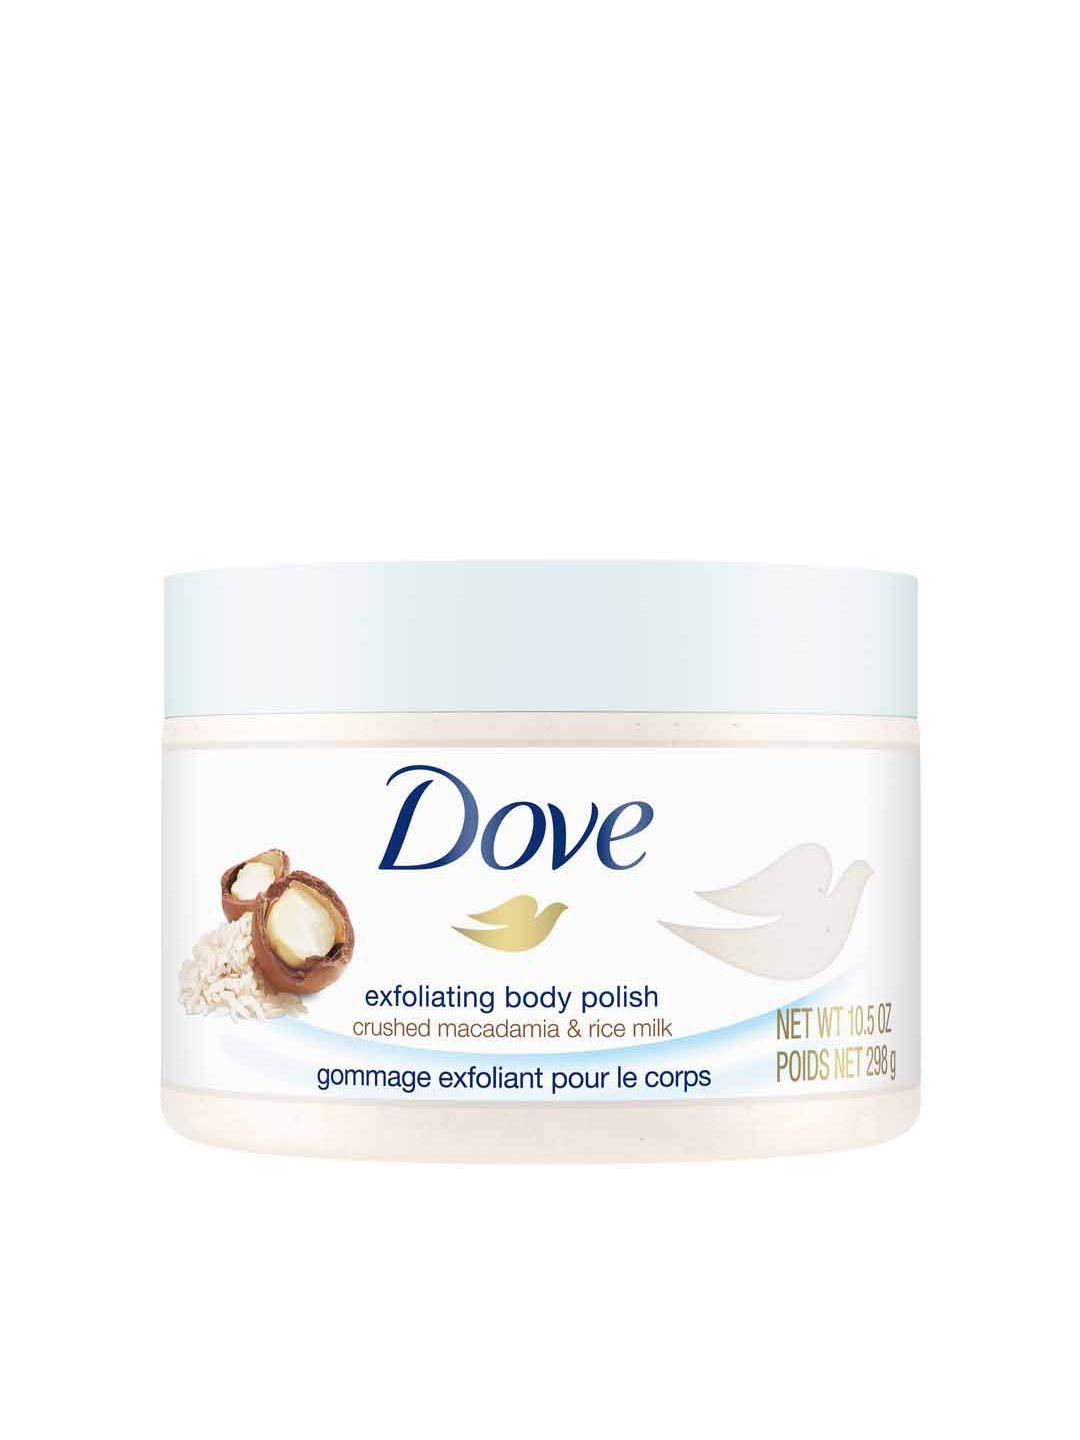 dove crushed macadamia & rice milk exfoliating body polish - 298 g